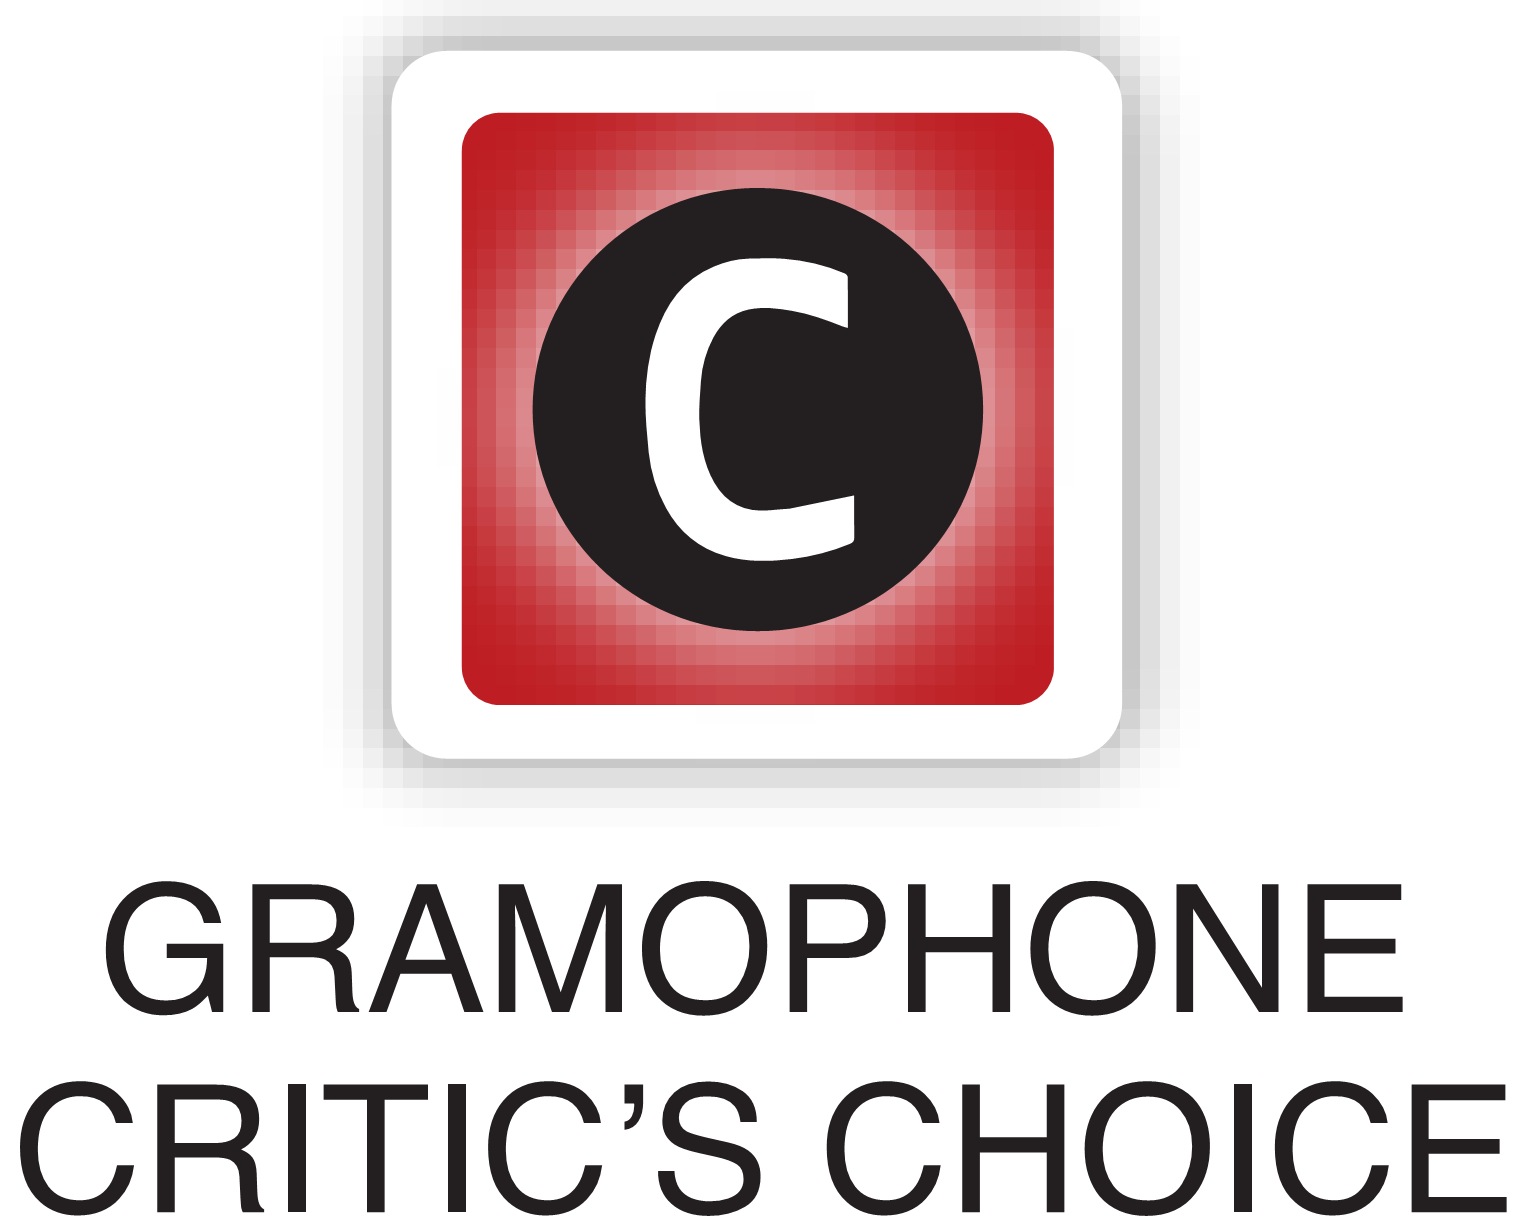 Gramophone: 'Critic’s Choice' (2013)